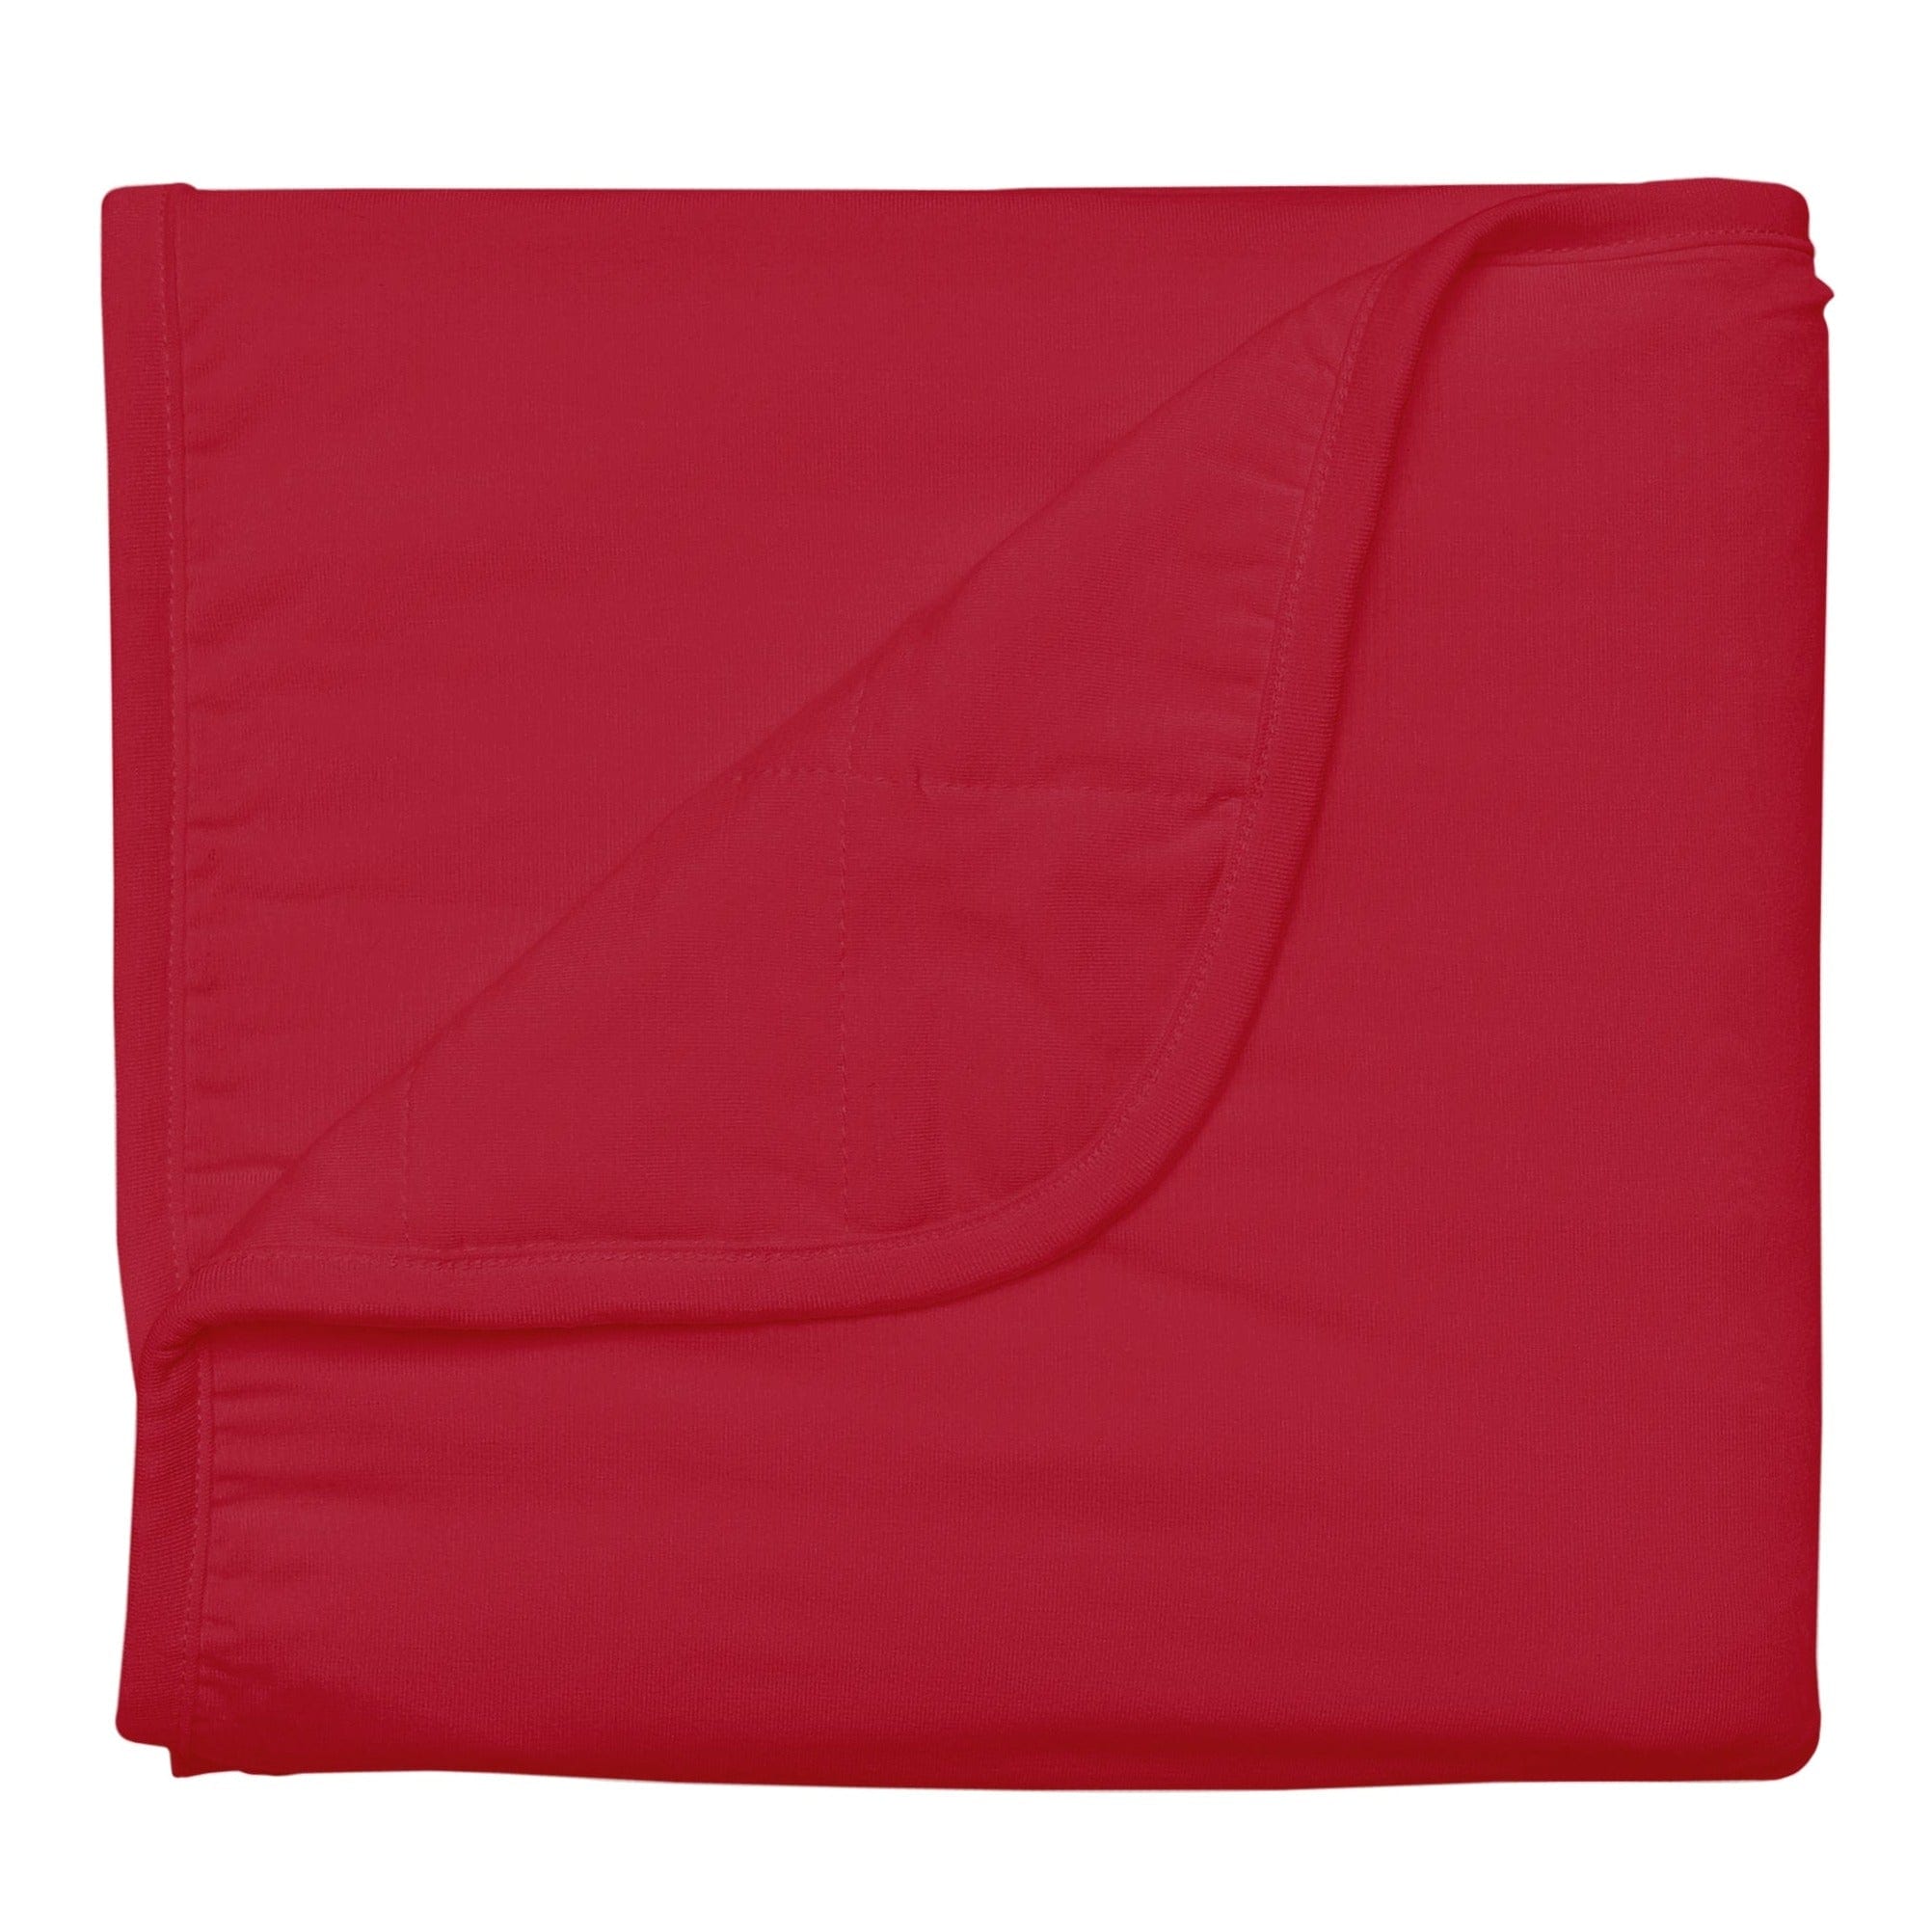 Kyte Baby Blanket in Cardinal Red